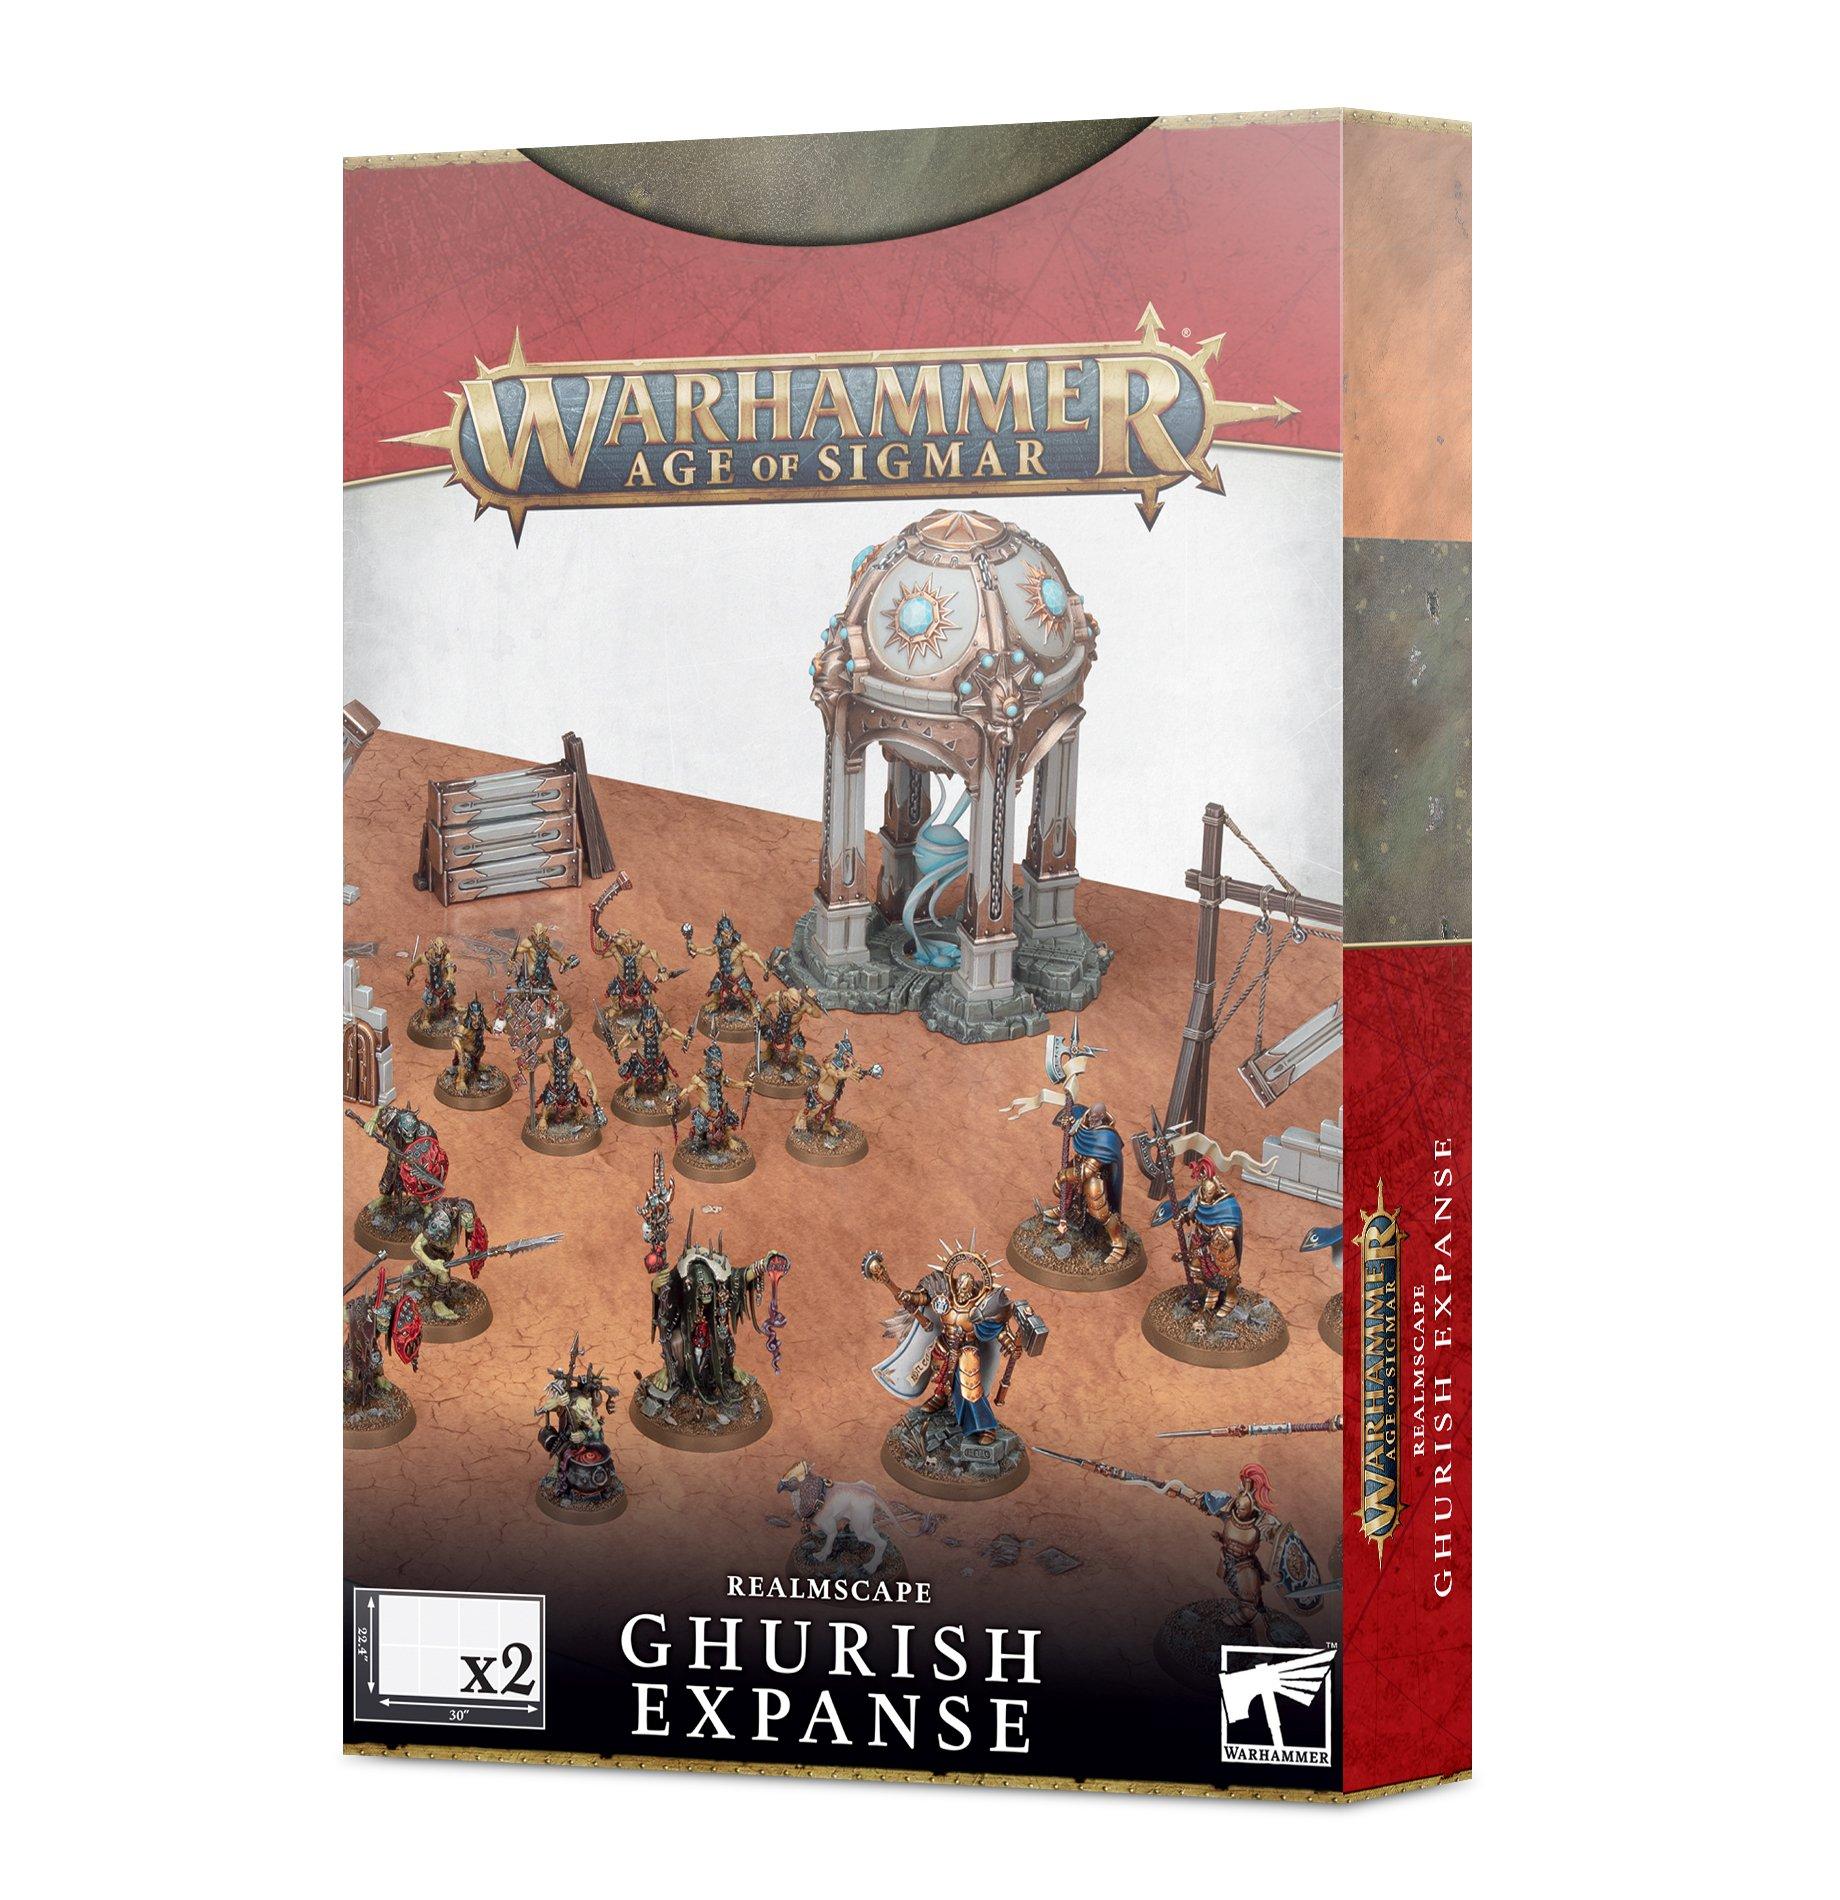 Warhammer Age of Sigmar - Realmscape Ghurish Expanse